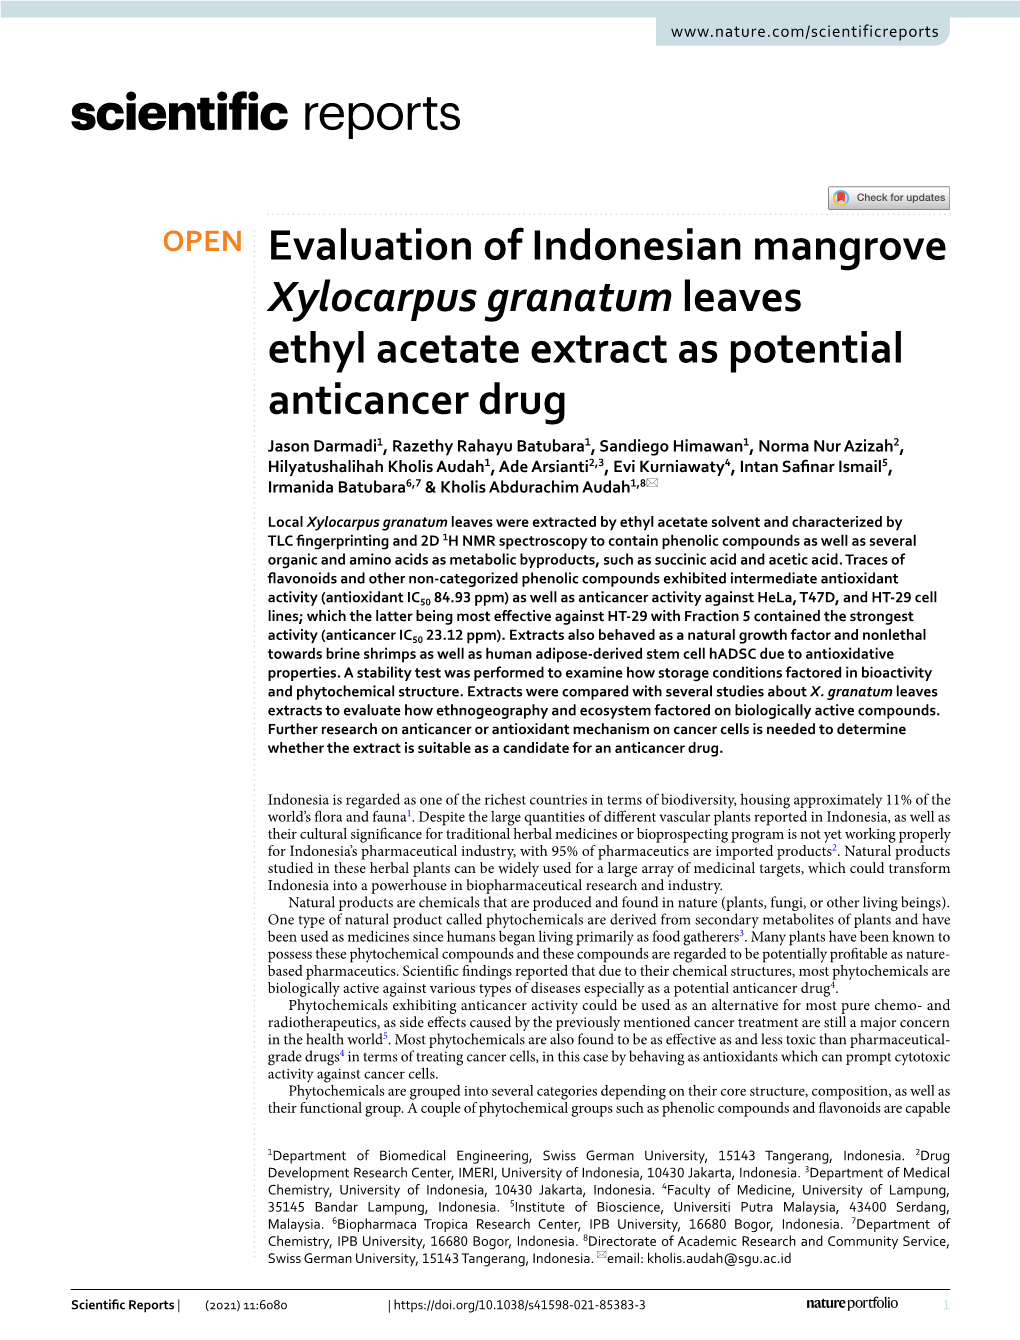 Evaluation of Indonesian Mangrove Xylocarpus Granatum Leaves Ethyl